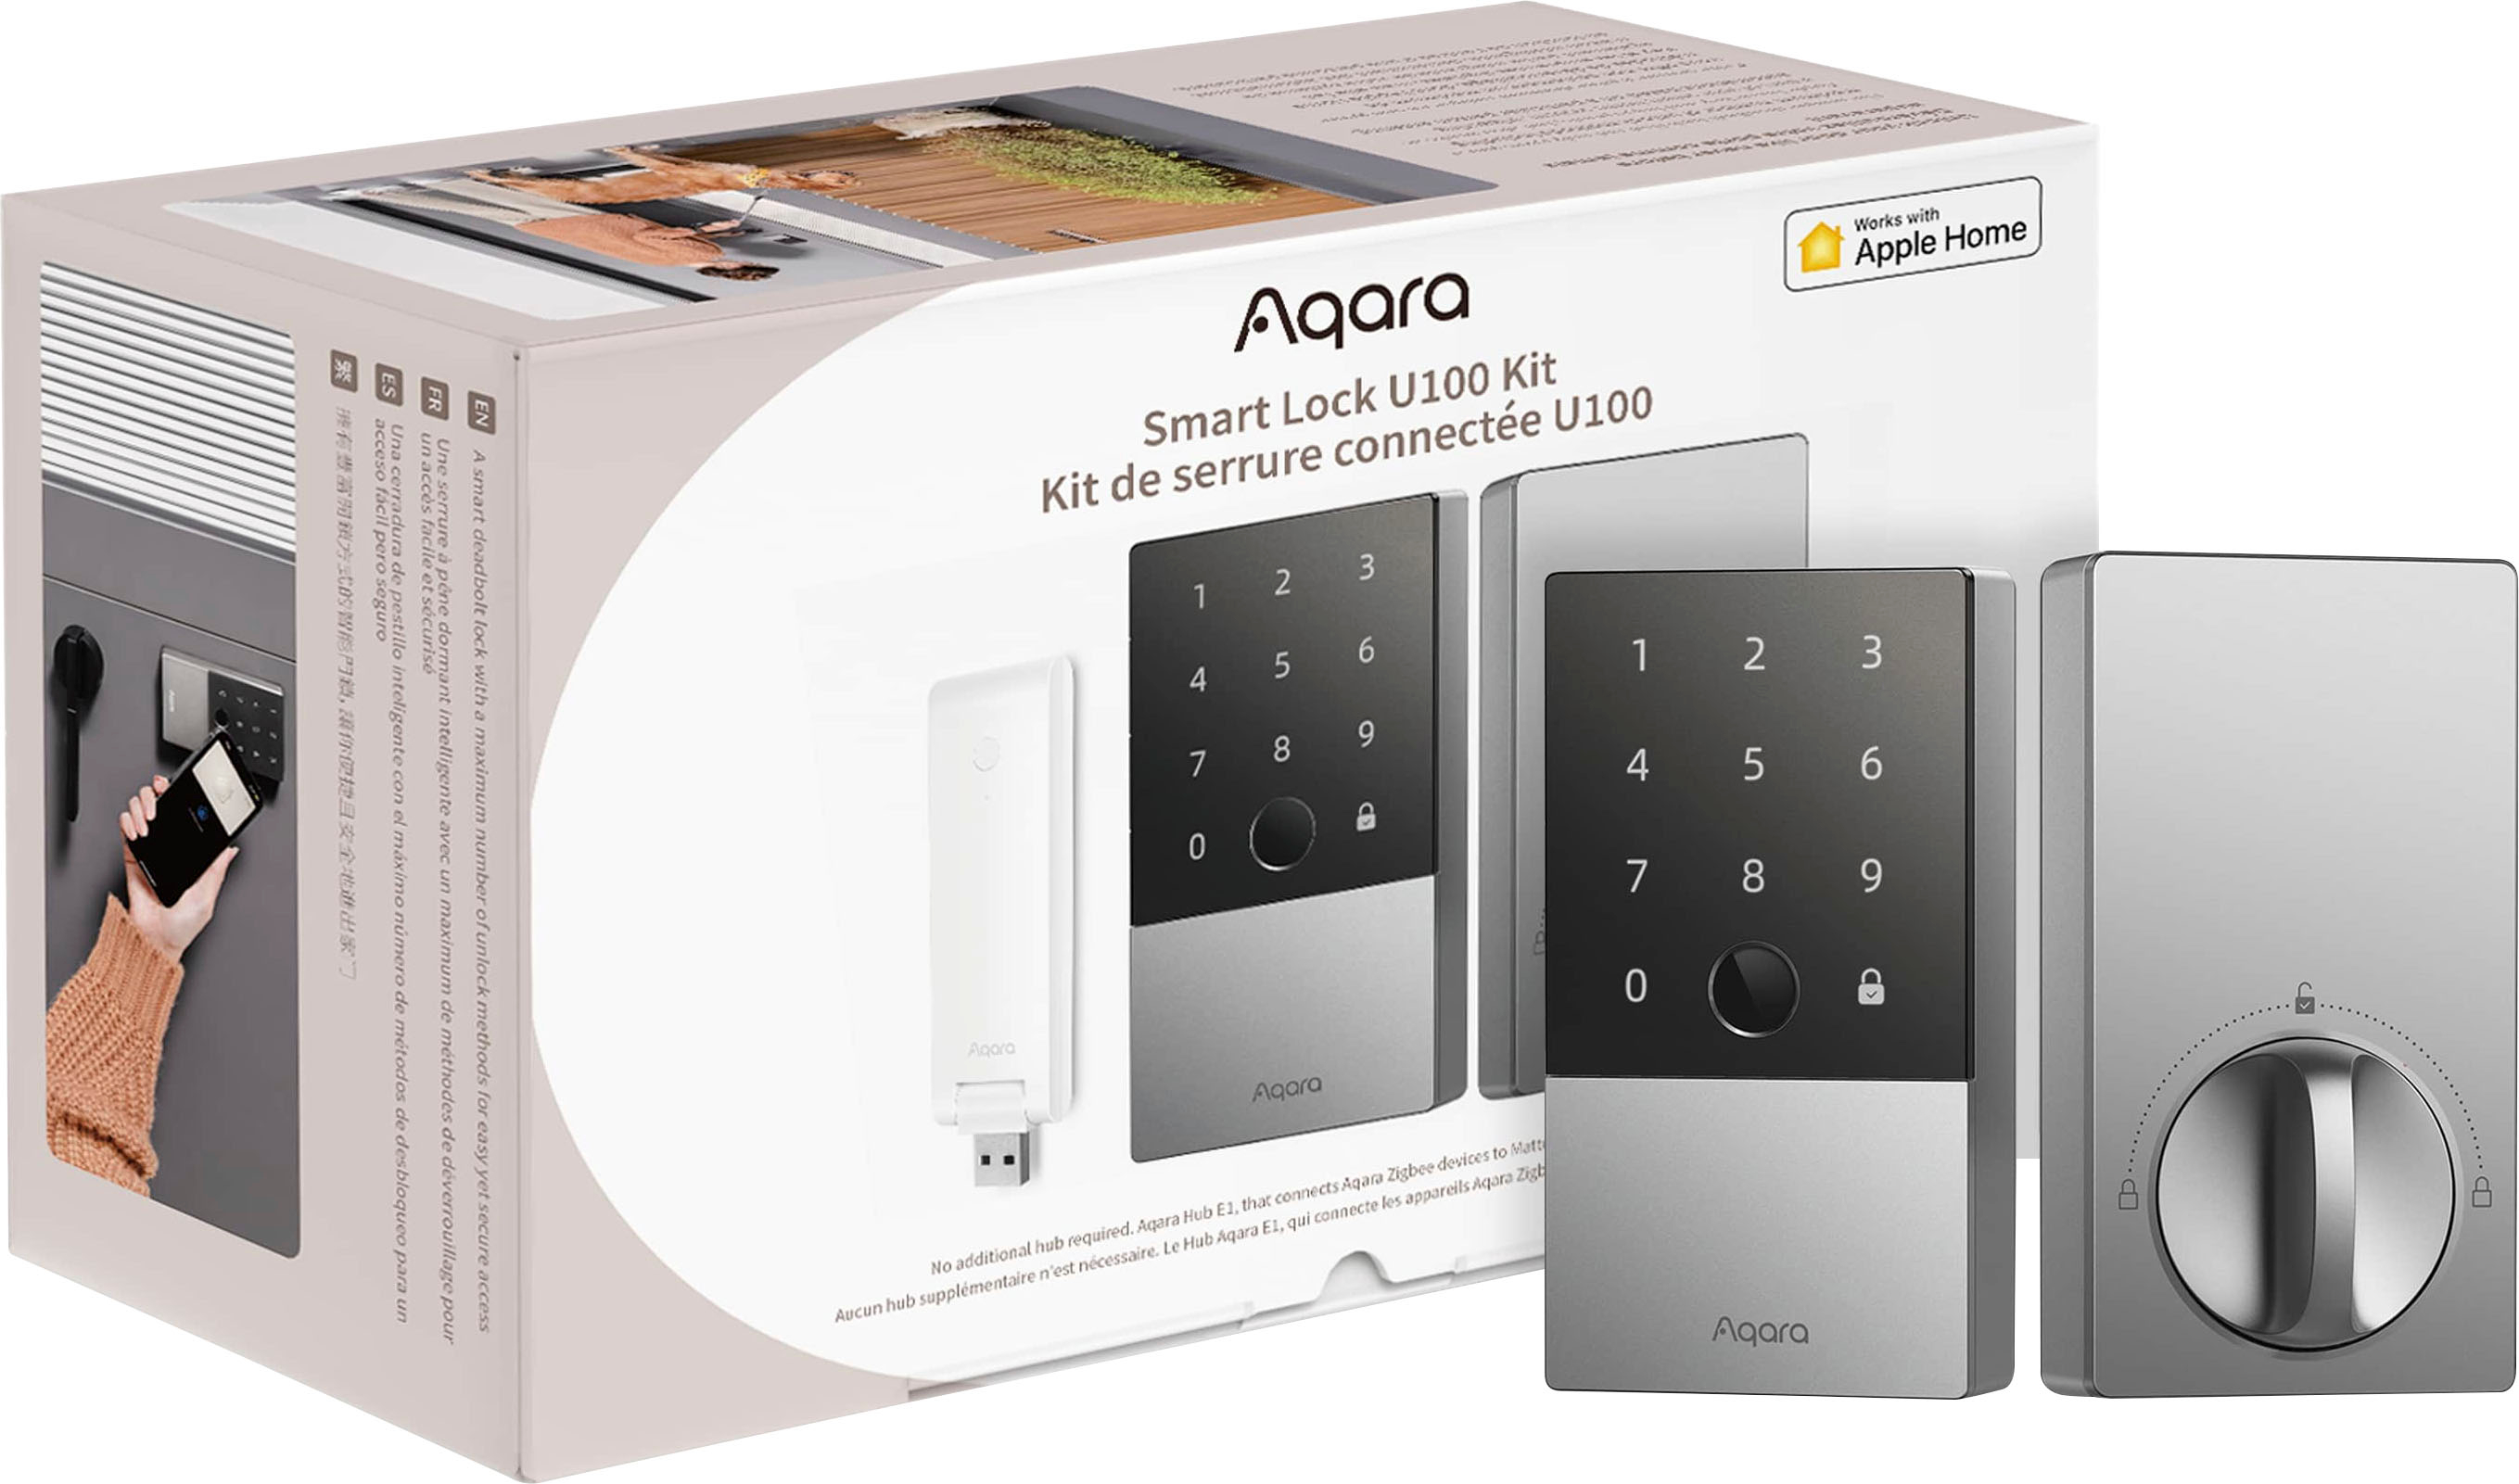 Aqara's affordable smart home lineup makes first jump to Matter